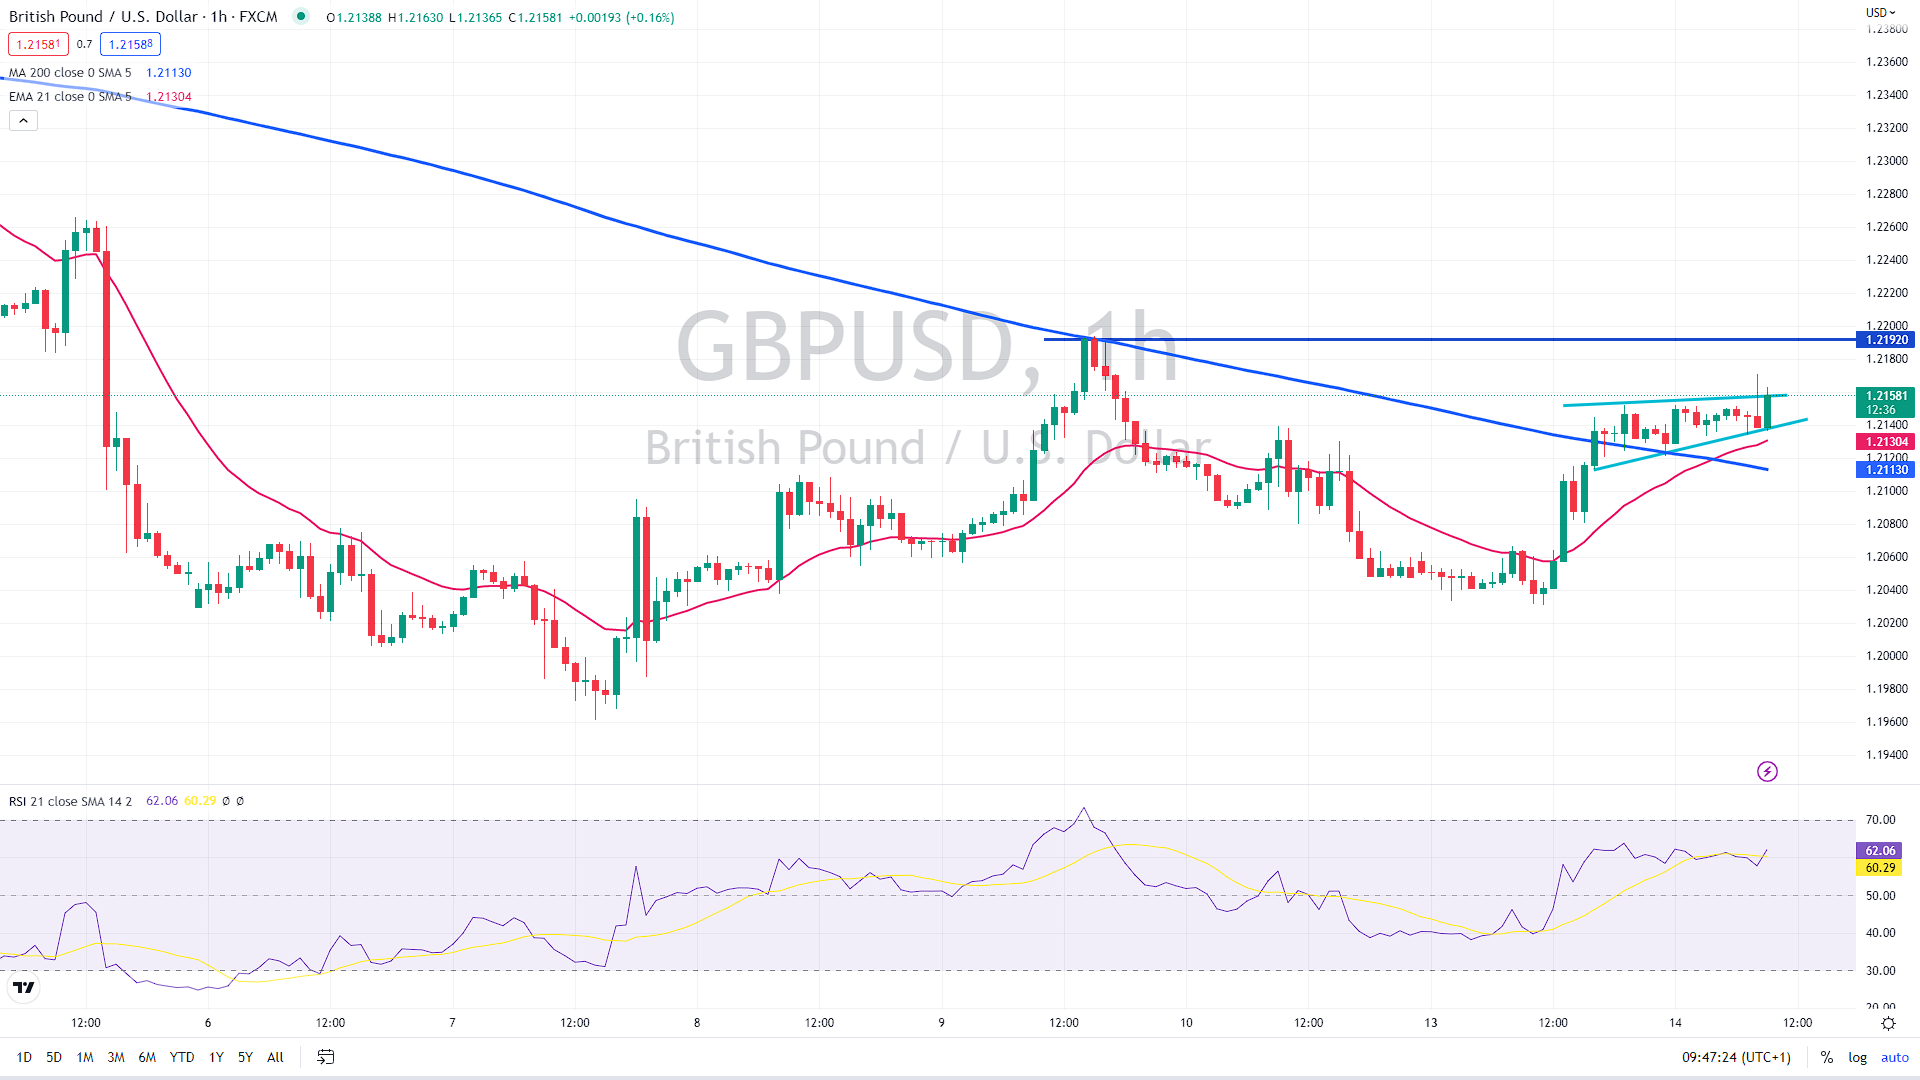 GBP/USD 1 hour chart